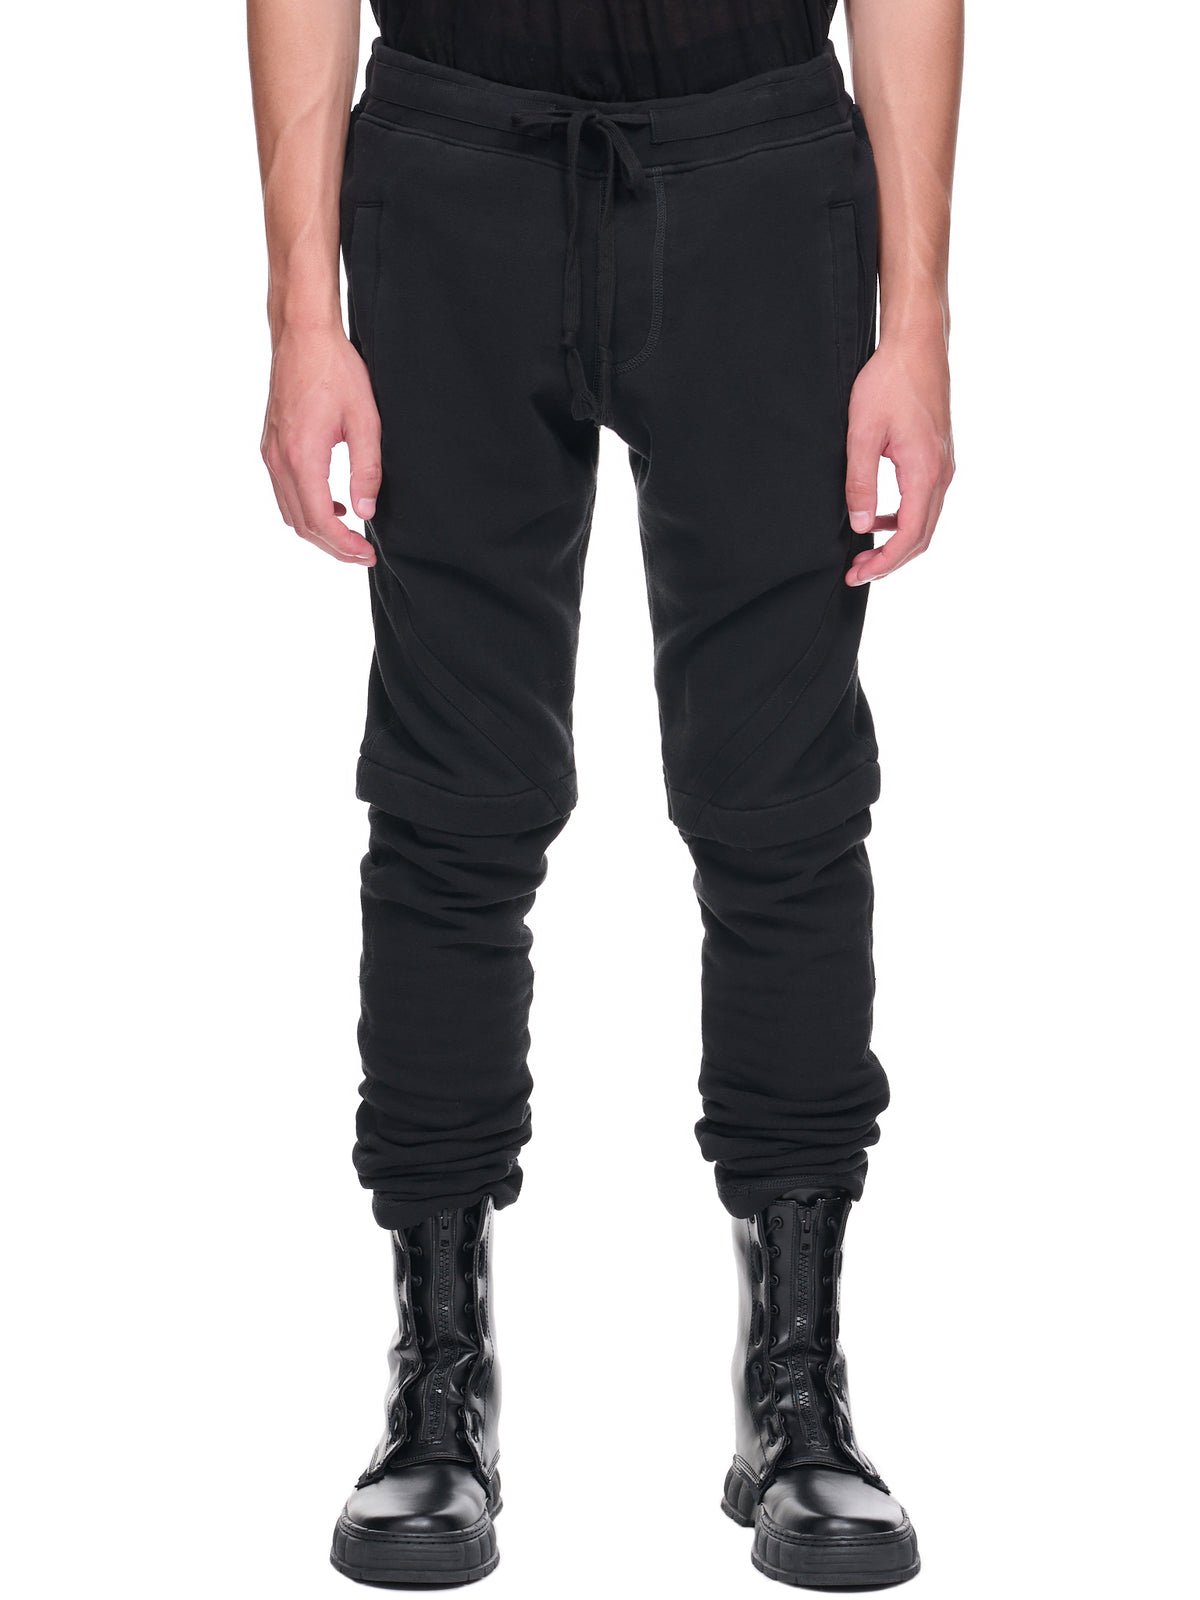 Convertible Sweatpants (EM213-BLACK)